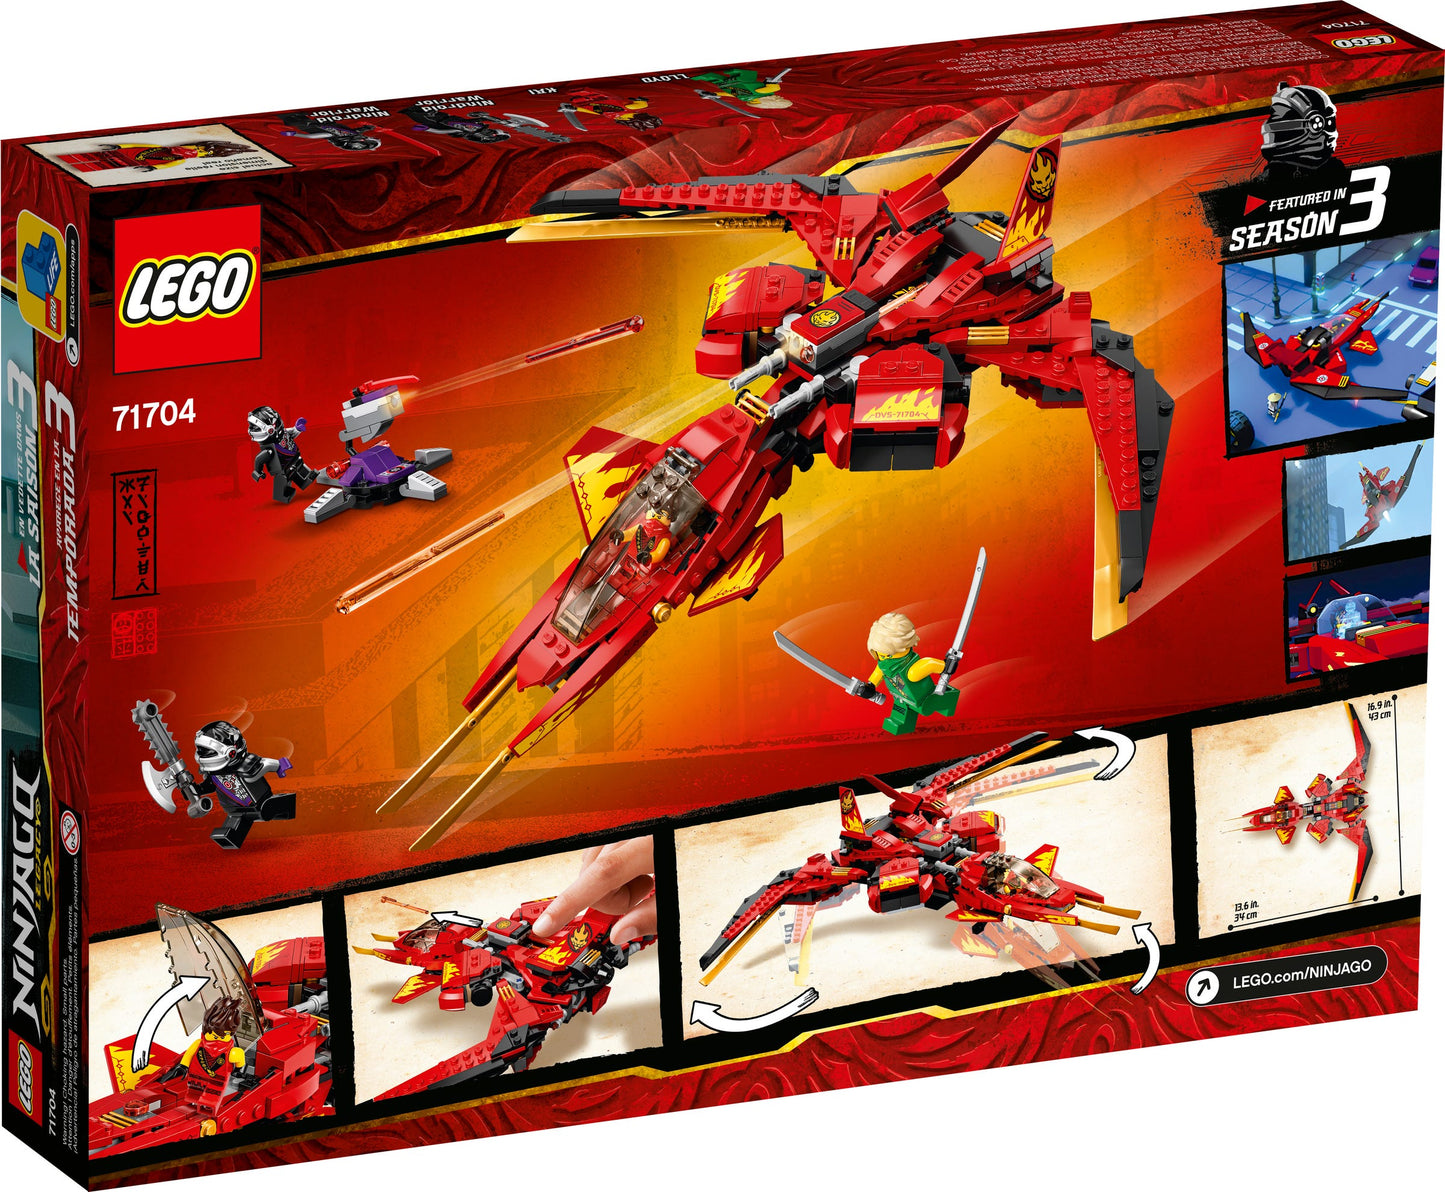 LEGO Ninjago Kai Fighter 71704